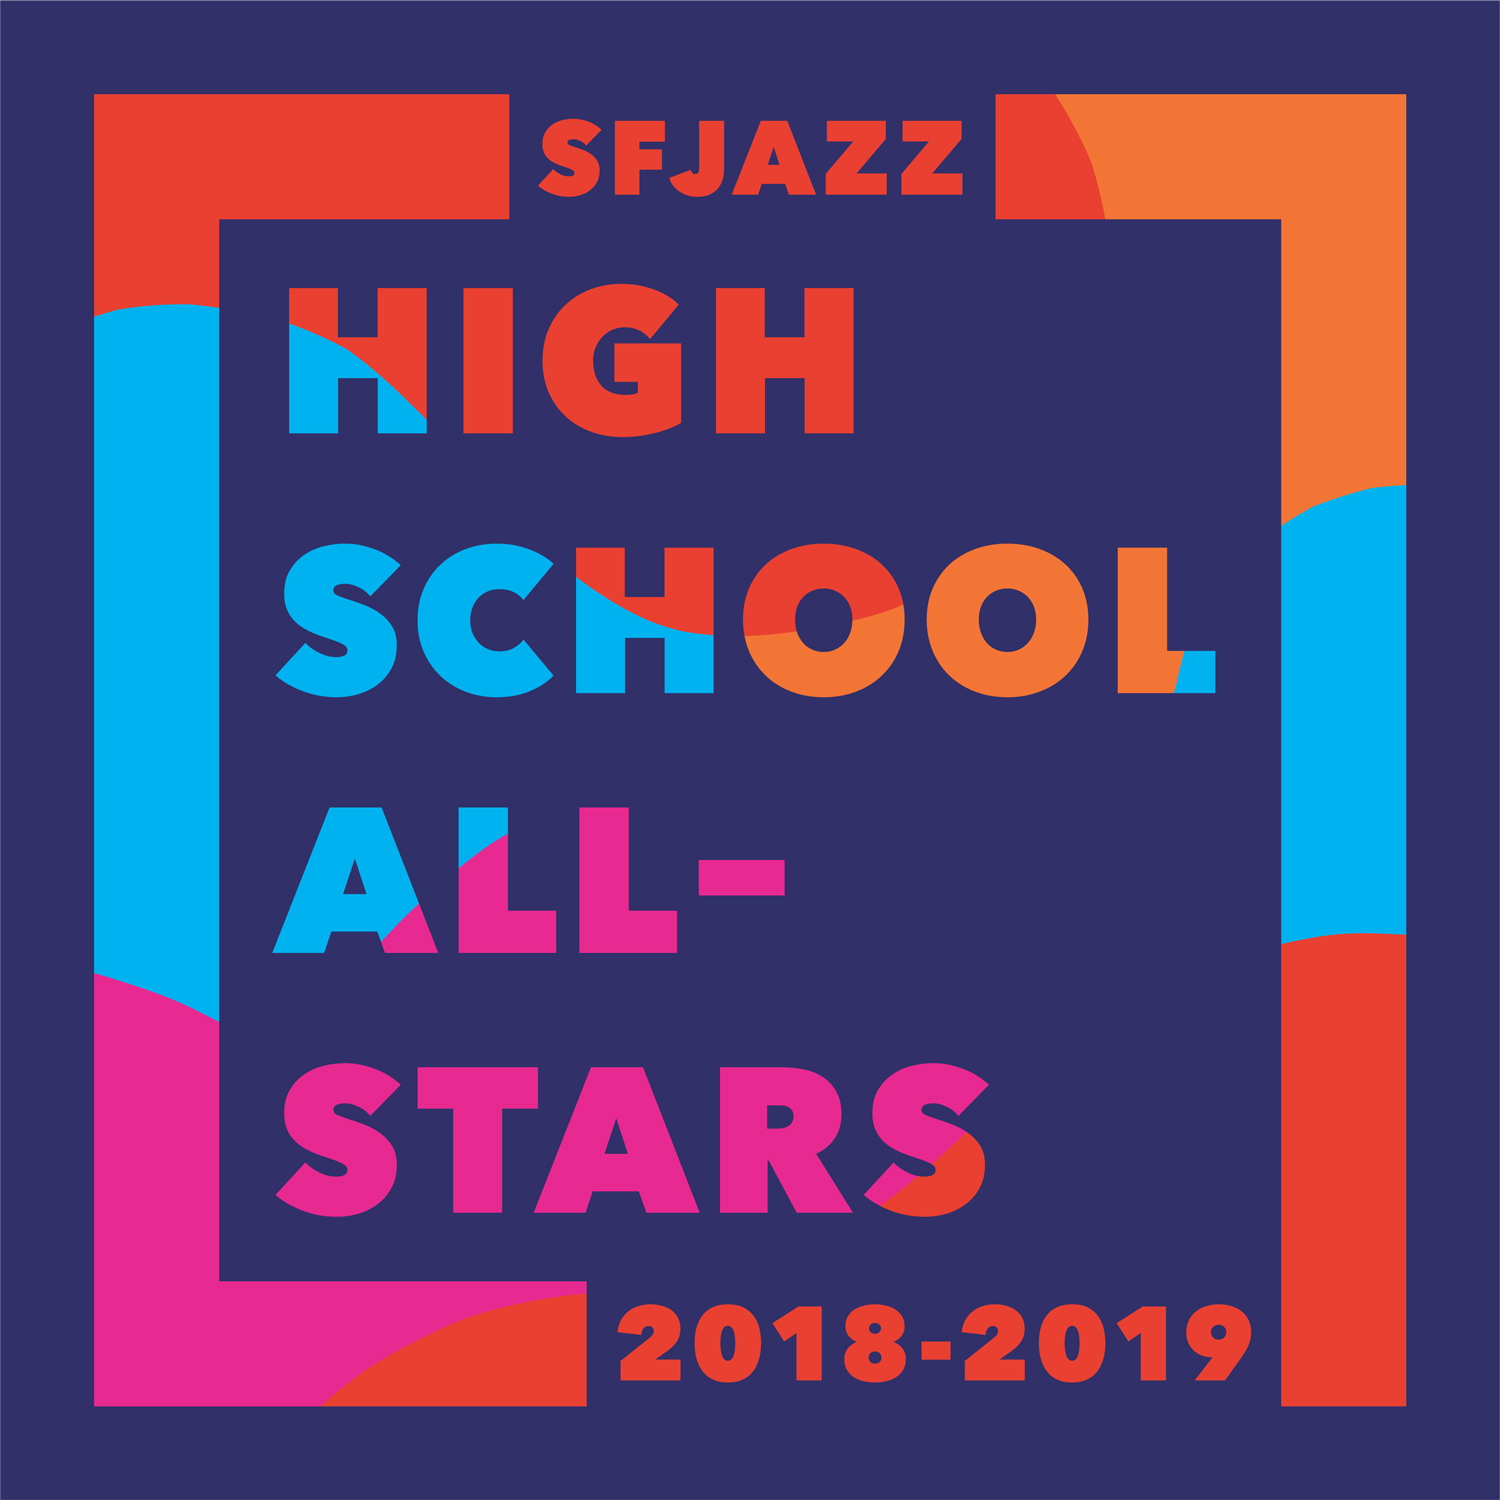 SFJAZZ High School All-Stars 2018-2019